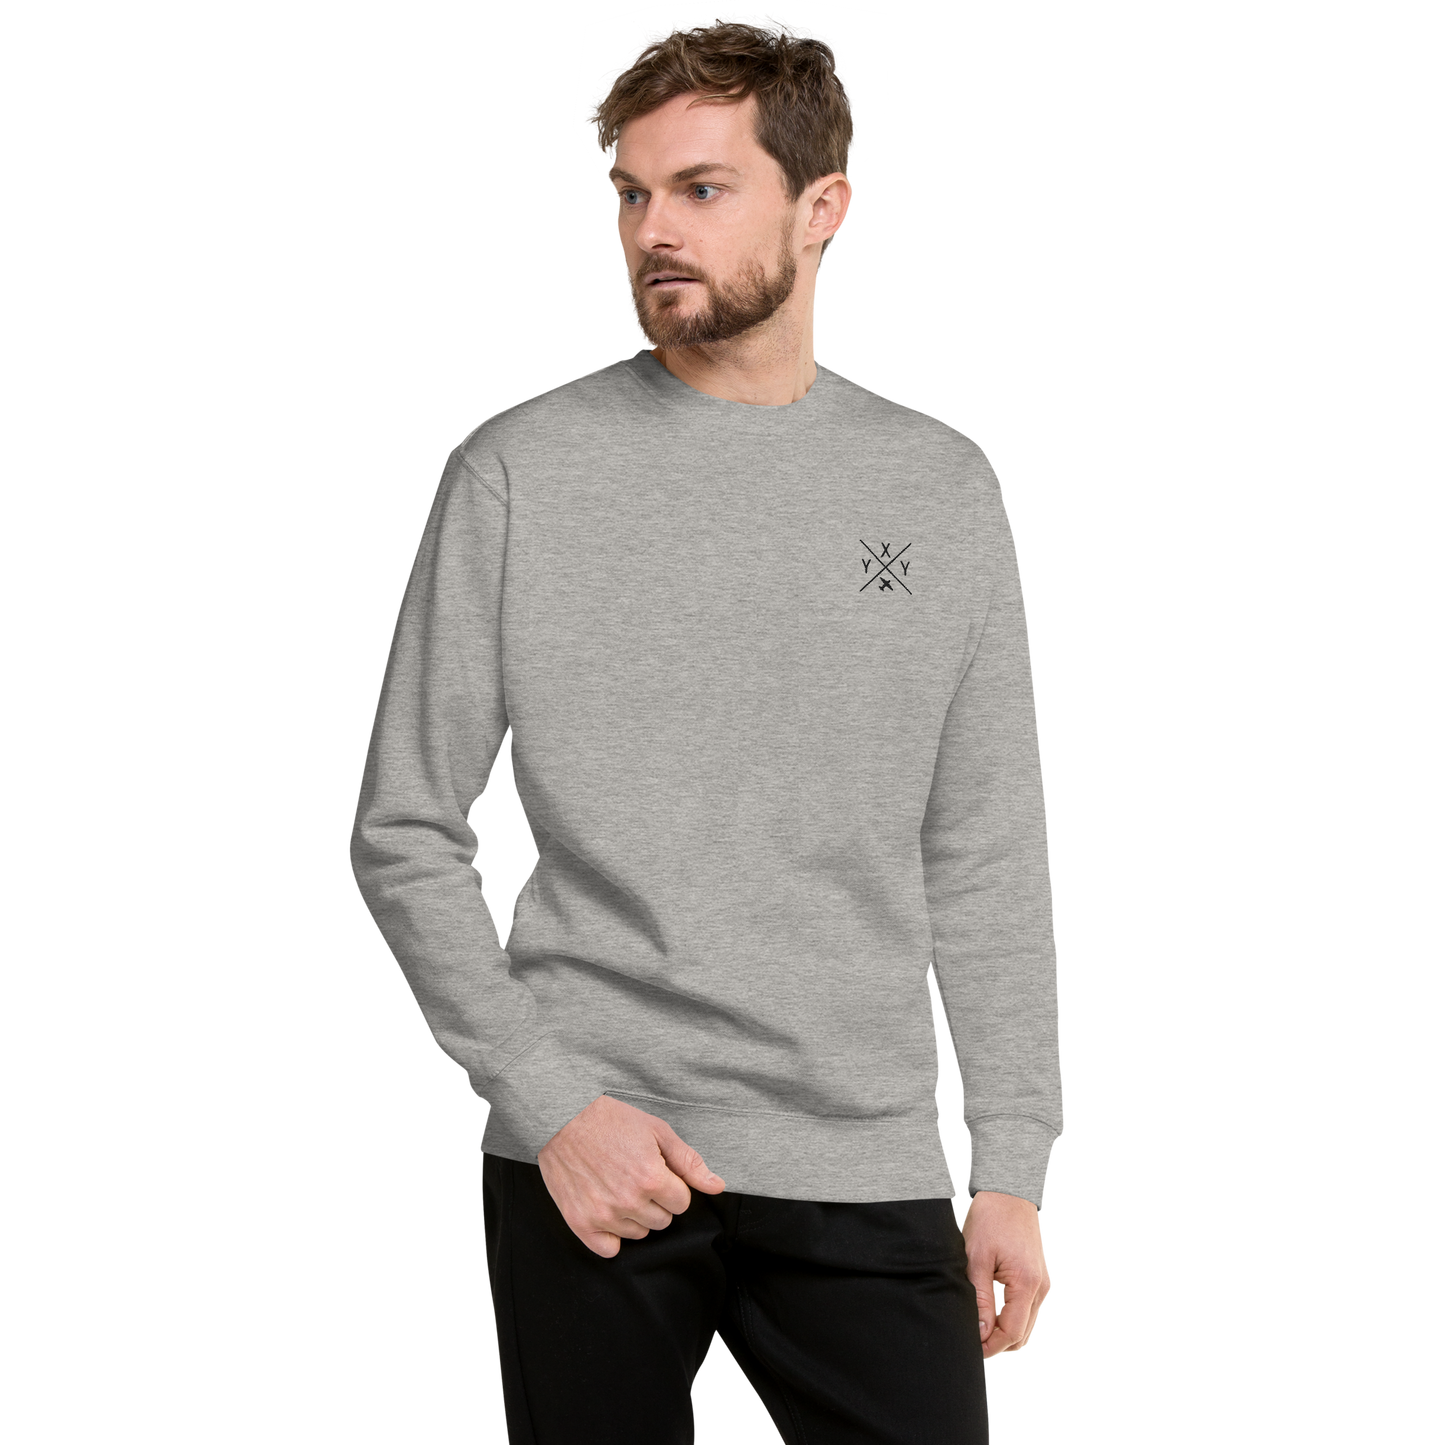 Crossed-X Premium Sweatshirt • YXY Whitehorse • YHM Designs - Image 01